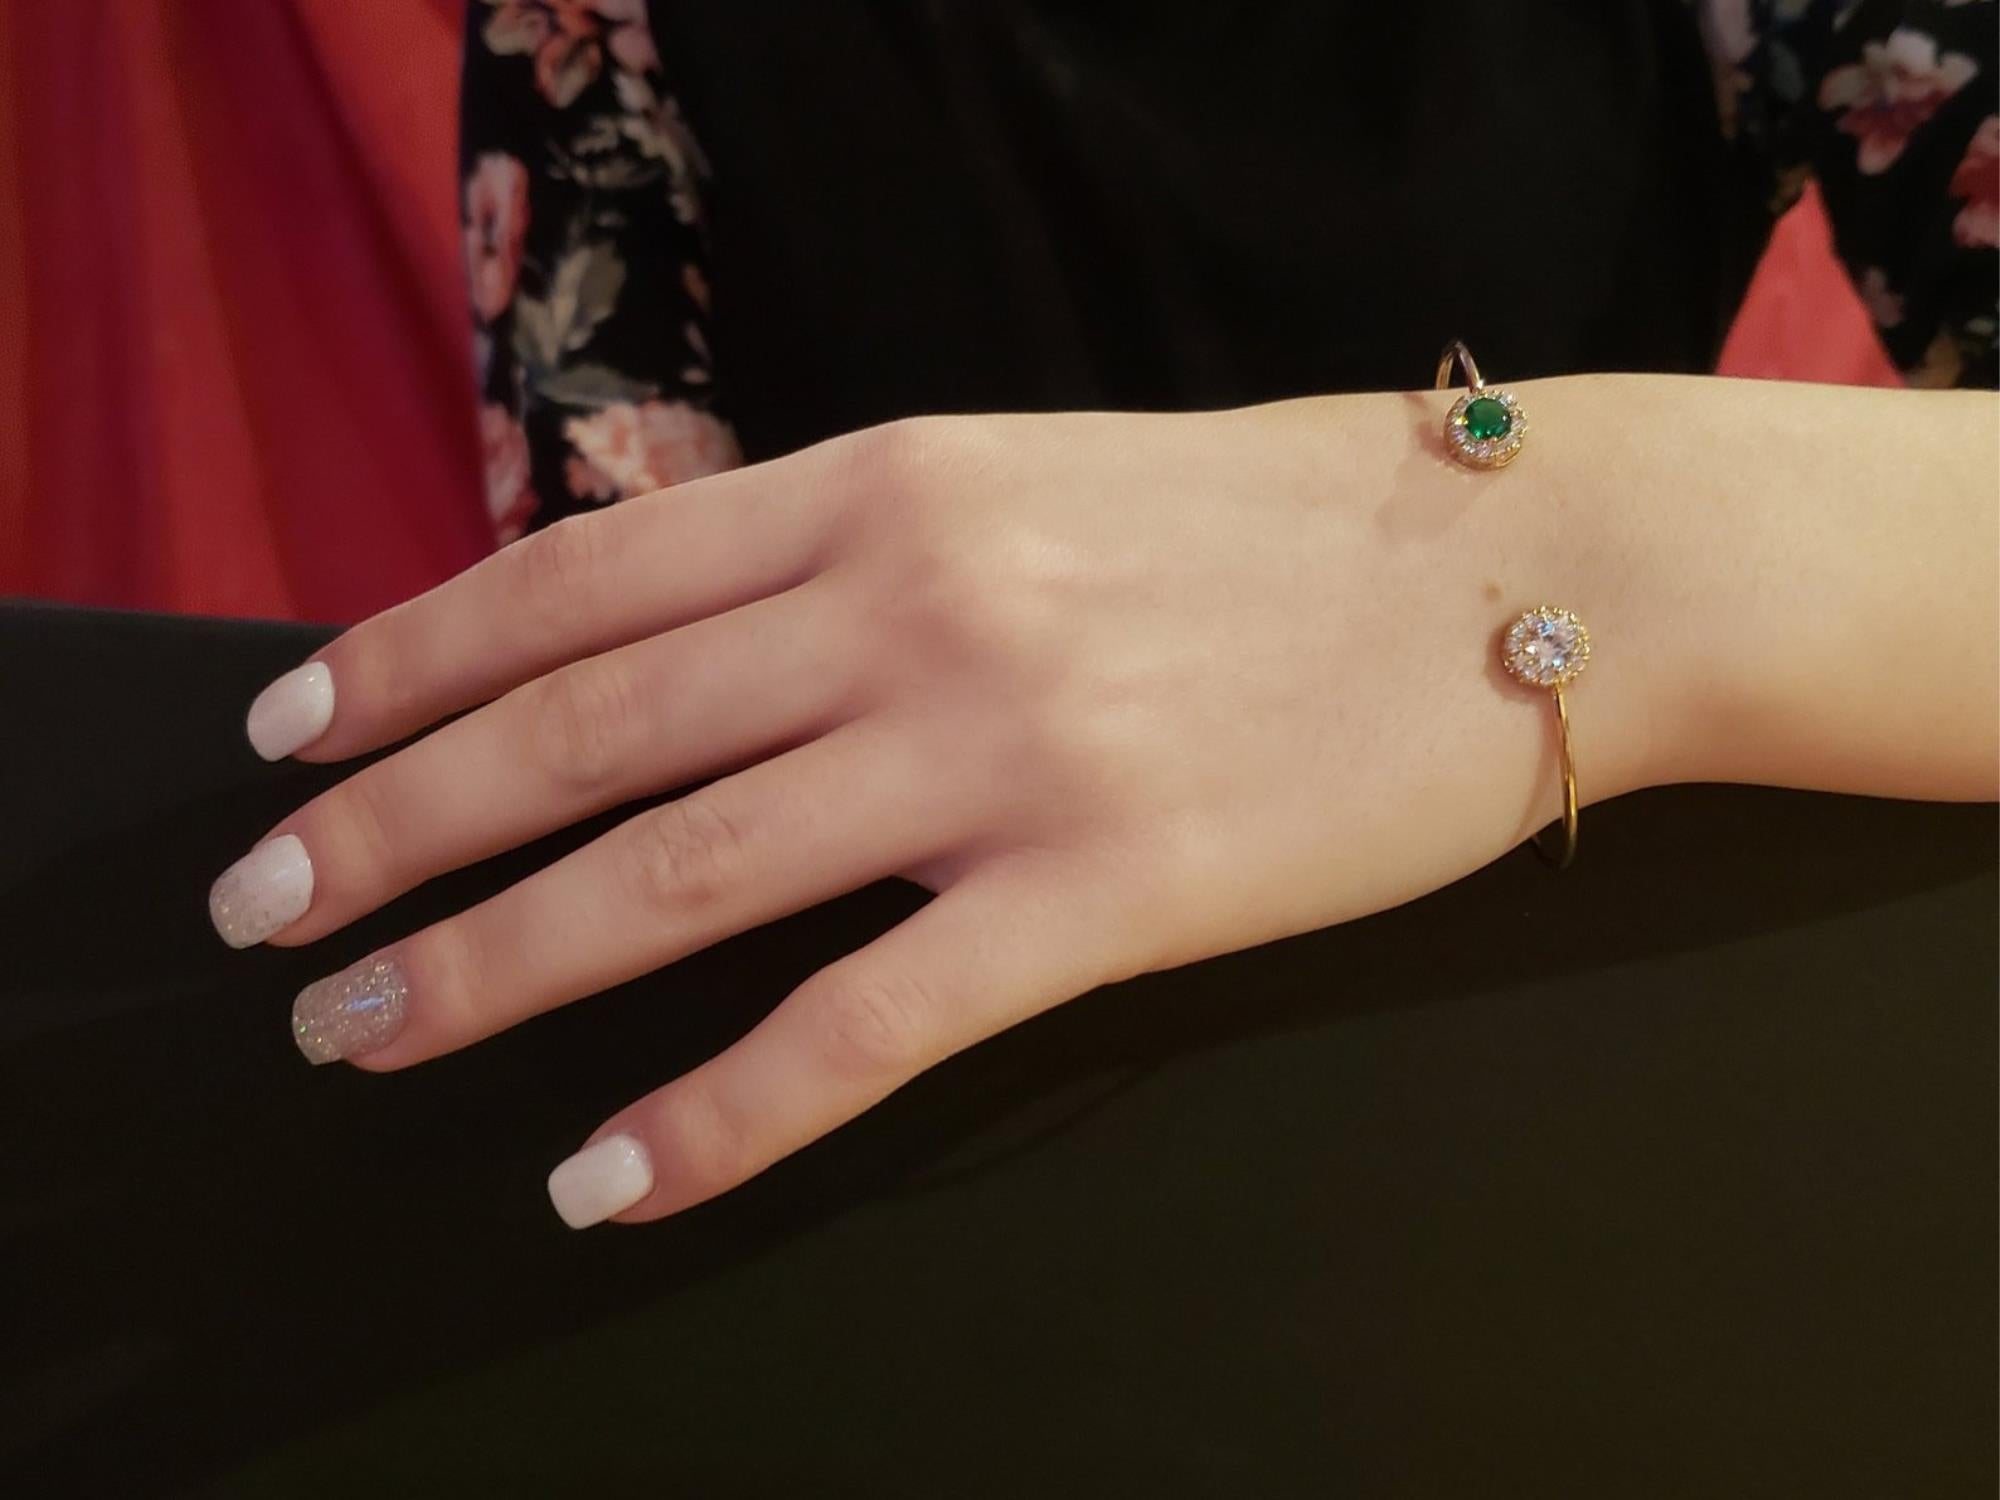 14Kt Gold Emerald & Zirconia Halo Design Bangle Bracelet